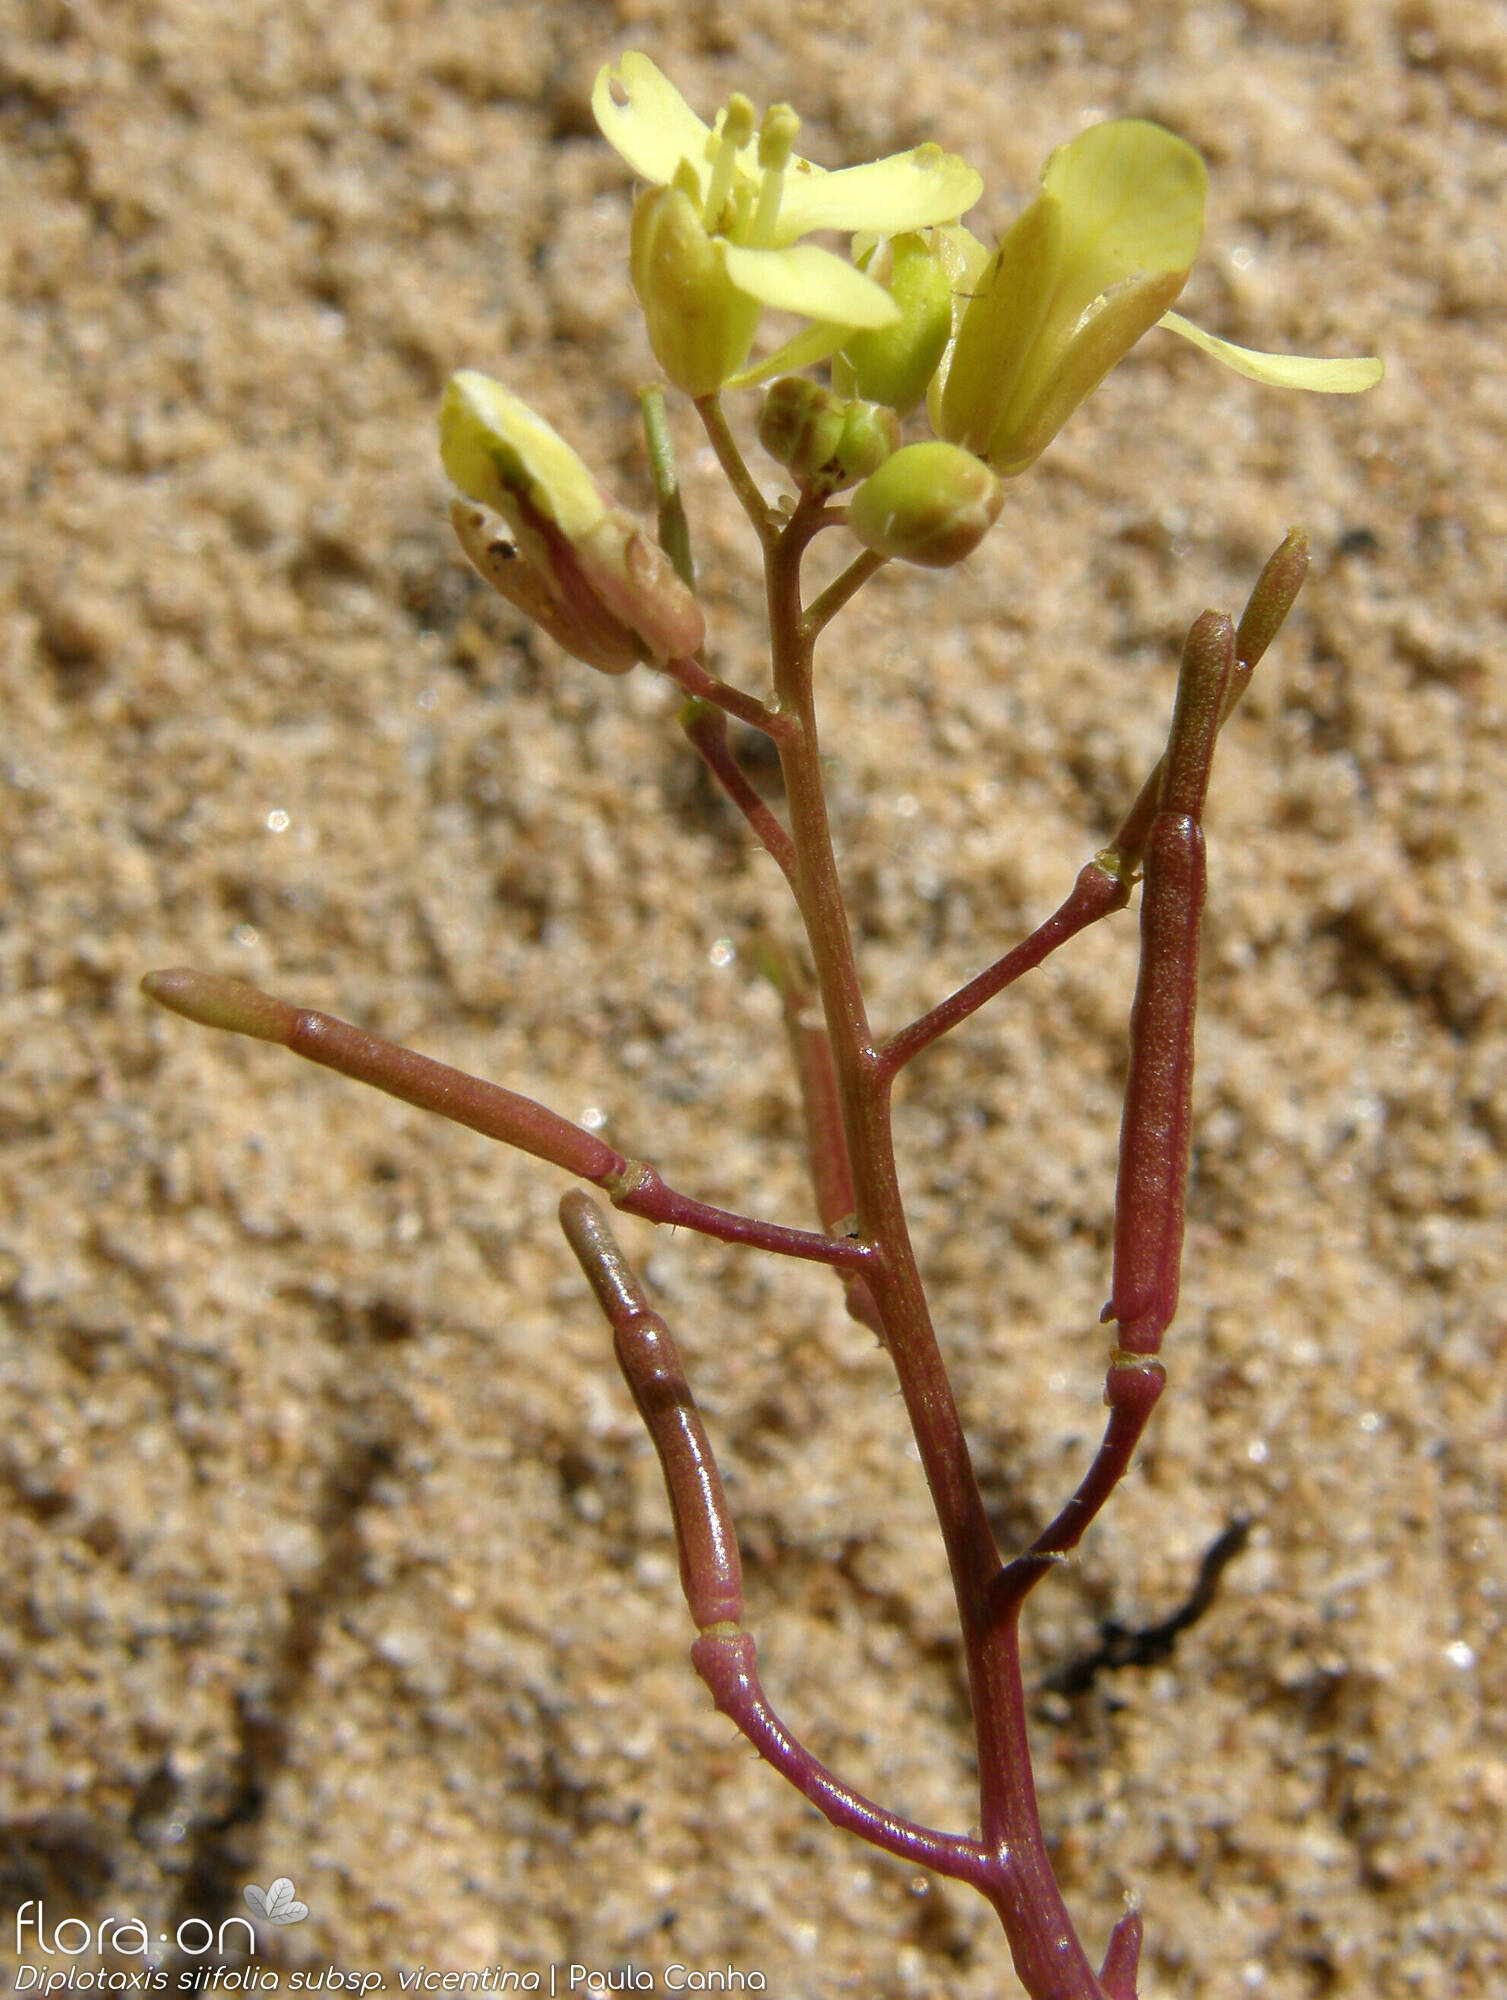 Diplotaxis siifolia - Flor (geral) | Paula Canha; CC BY-NC 4.0